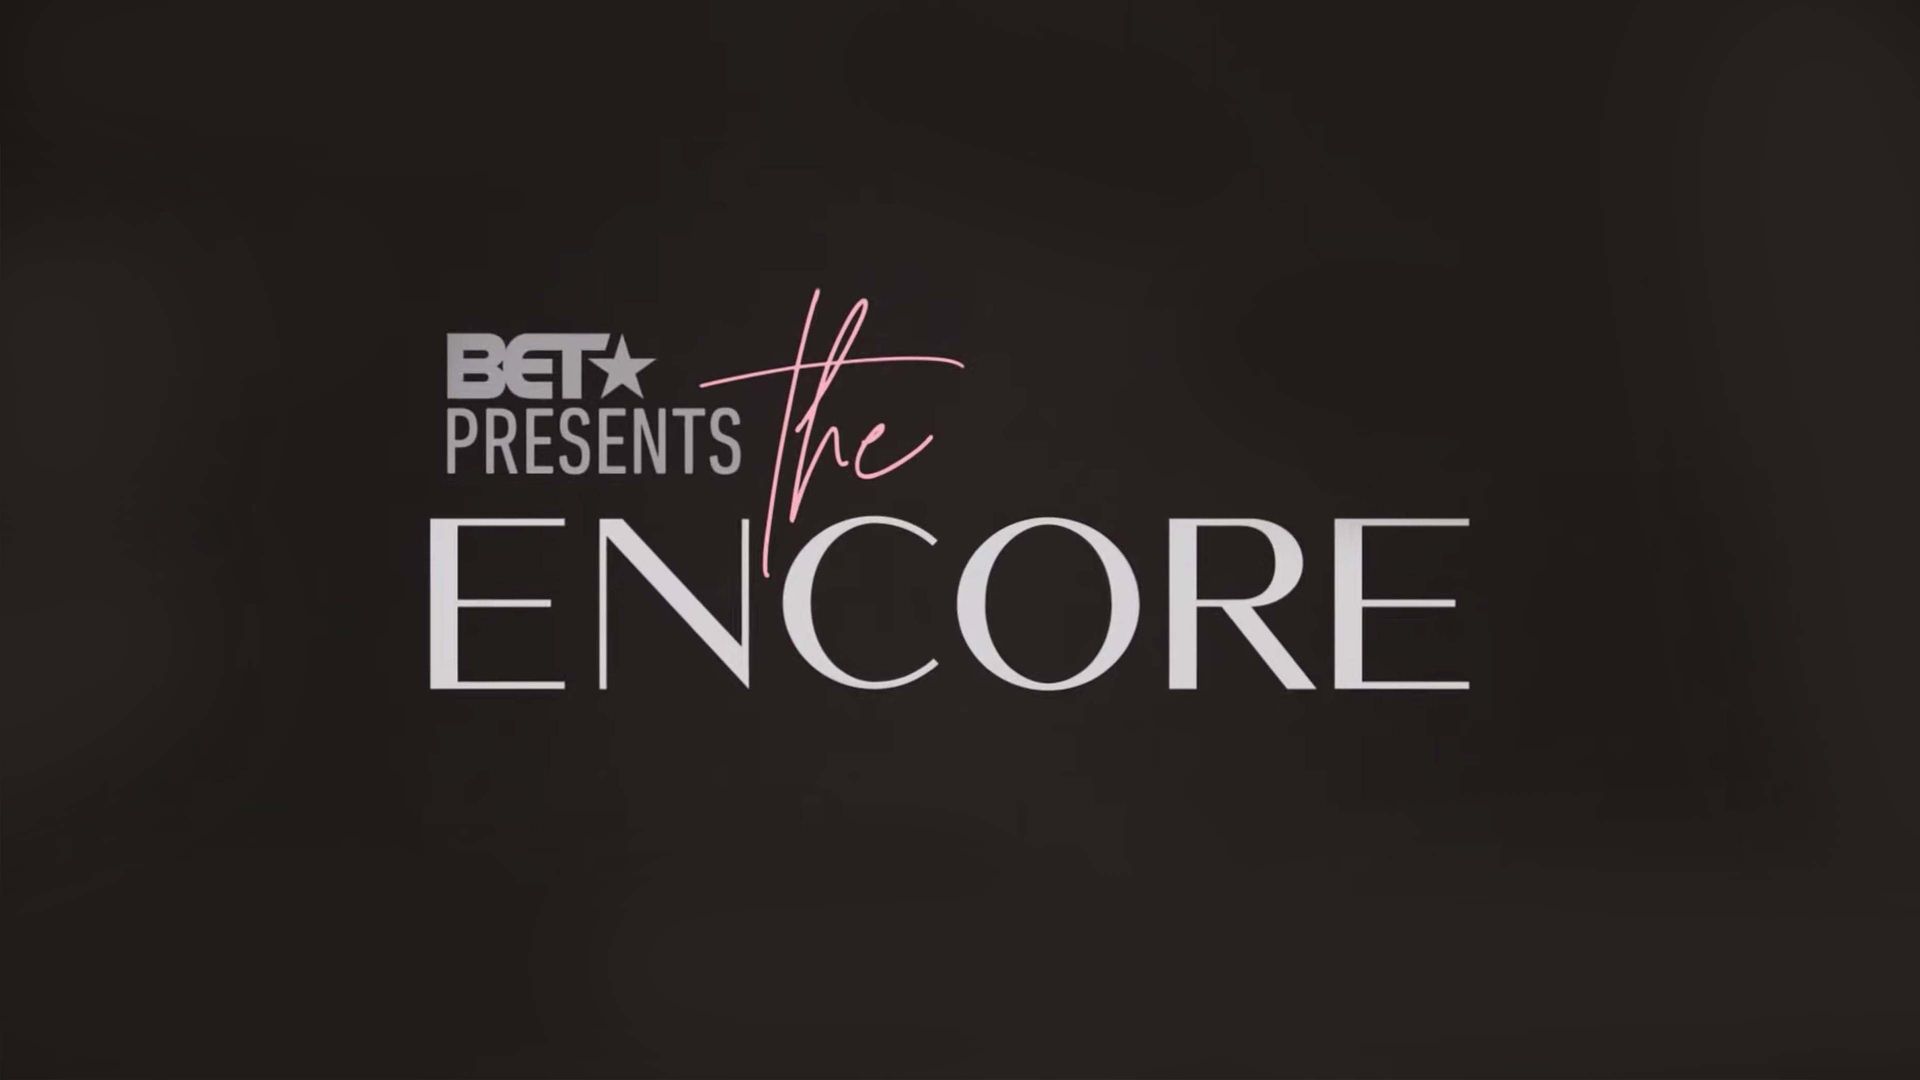 BET Presents: The Encore Backdrop